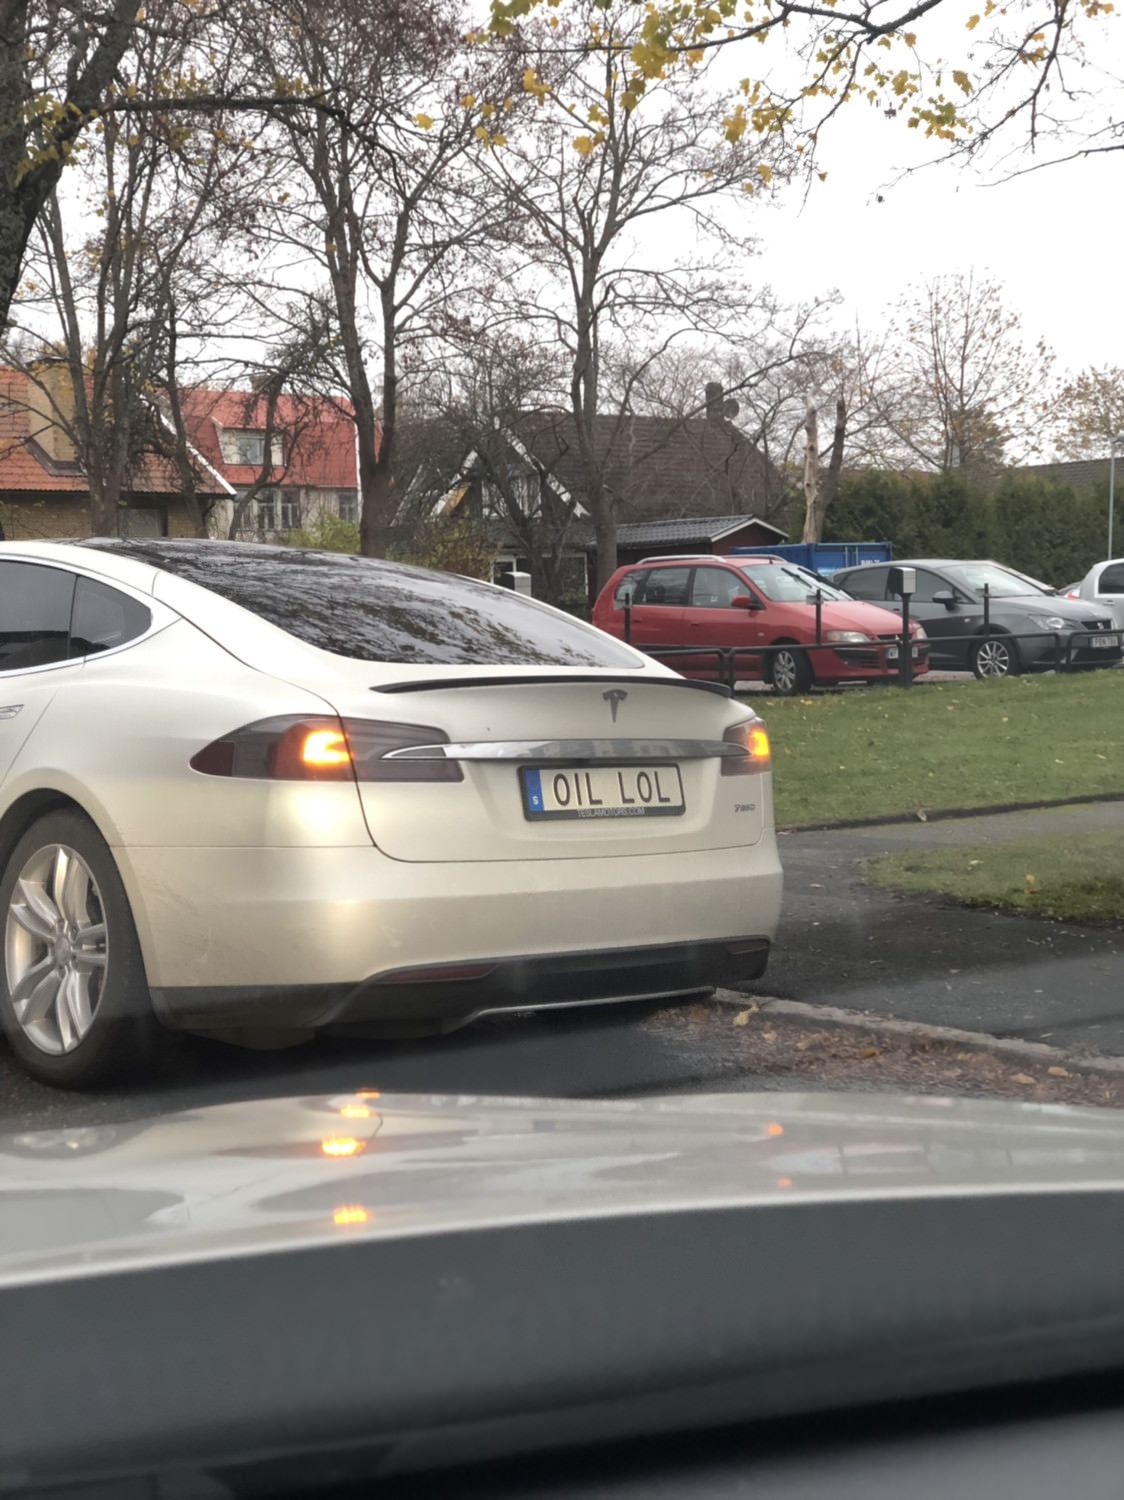 The vanity plate of this Tesla